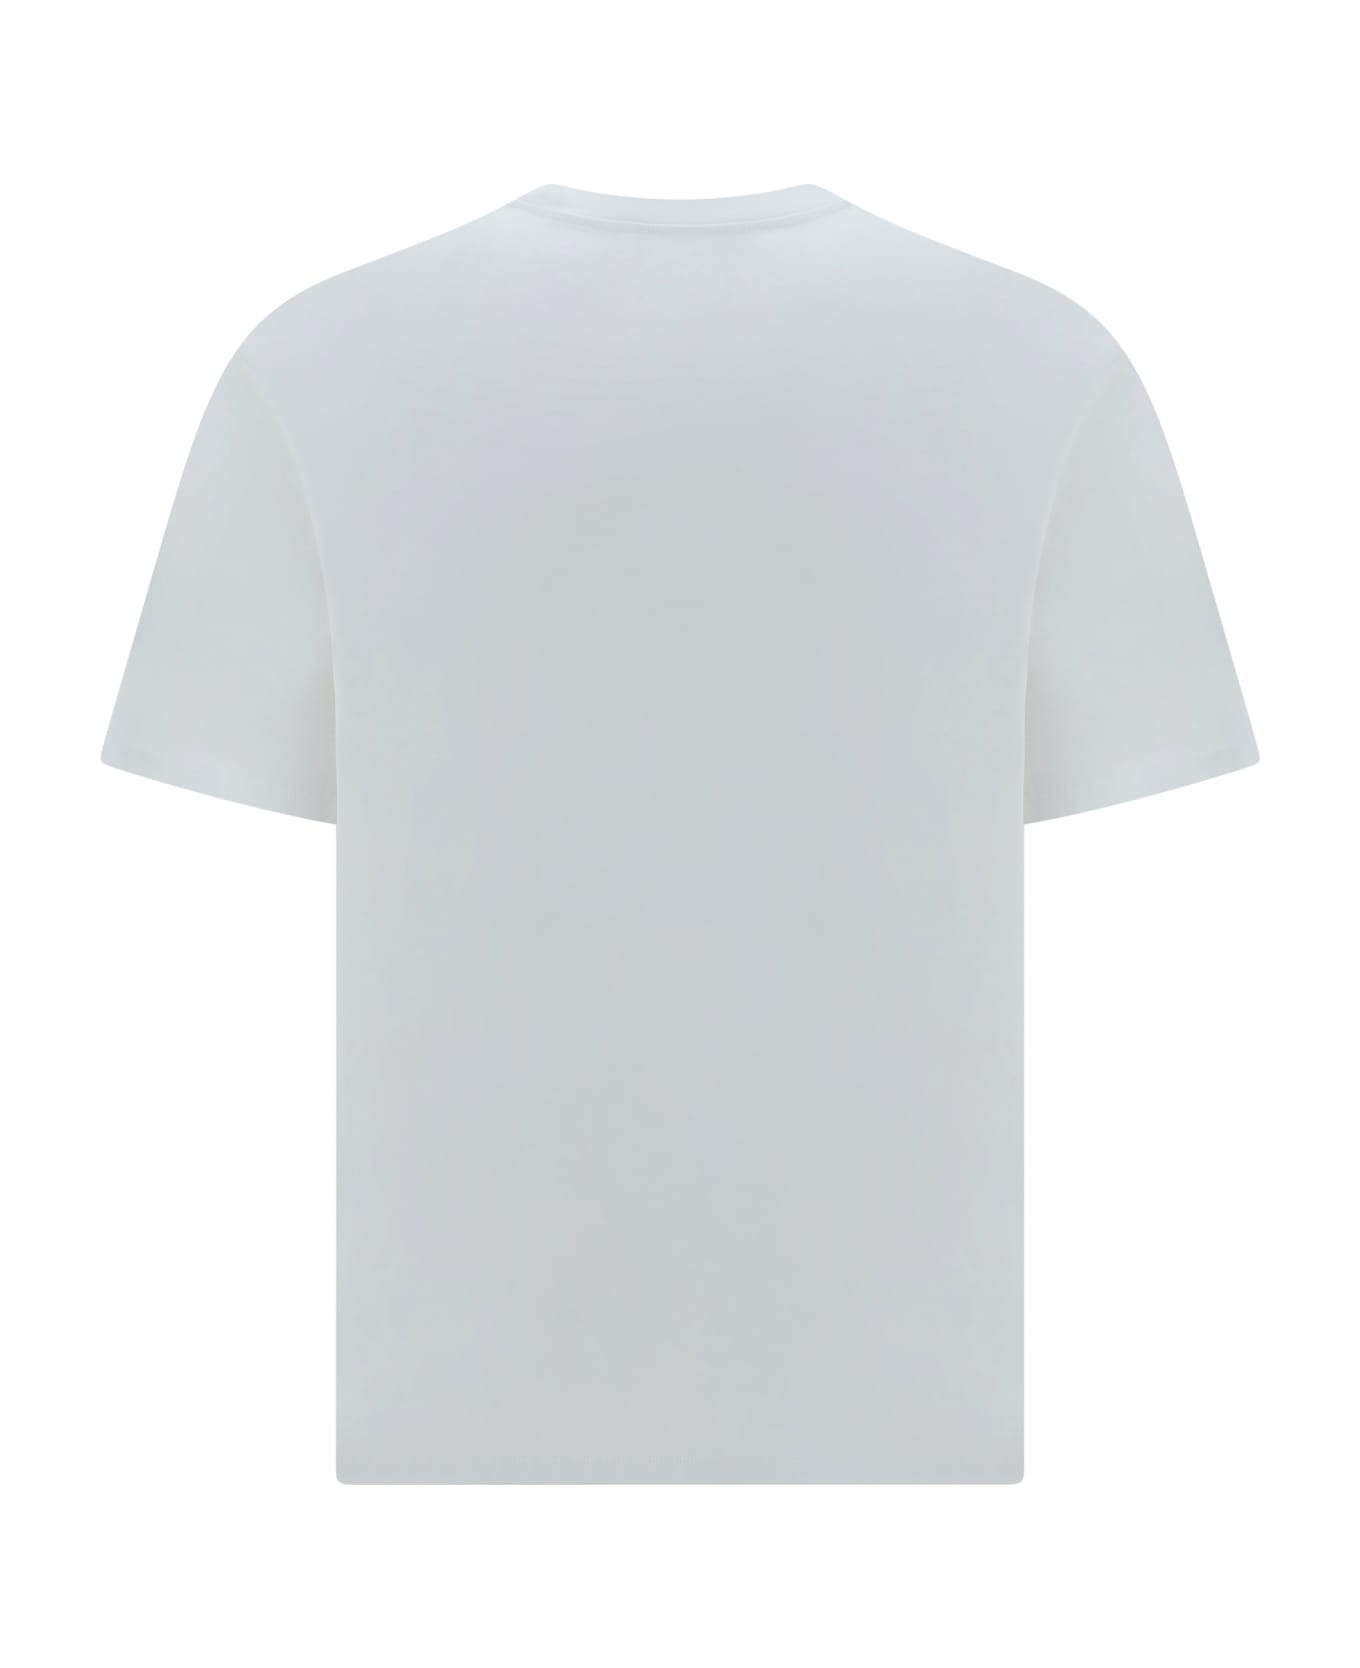 Lanvin T-shirt - Optic White Tシャツ